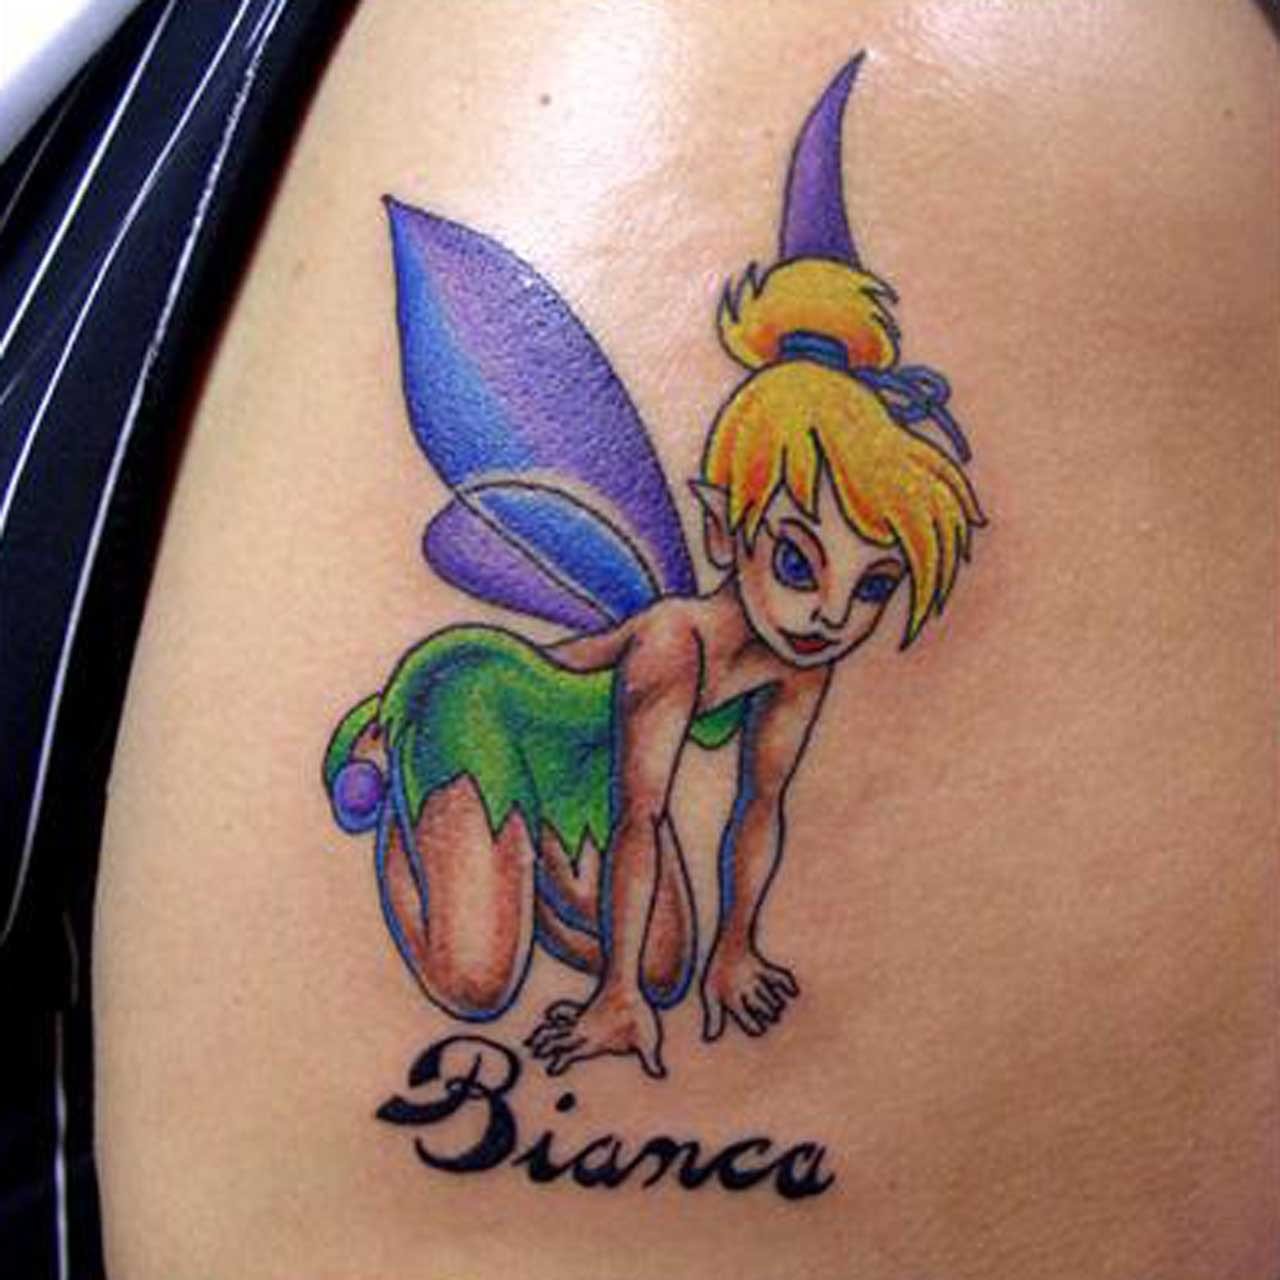 Bianca – Animated Fairy Tattoo Design